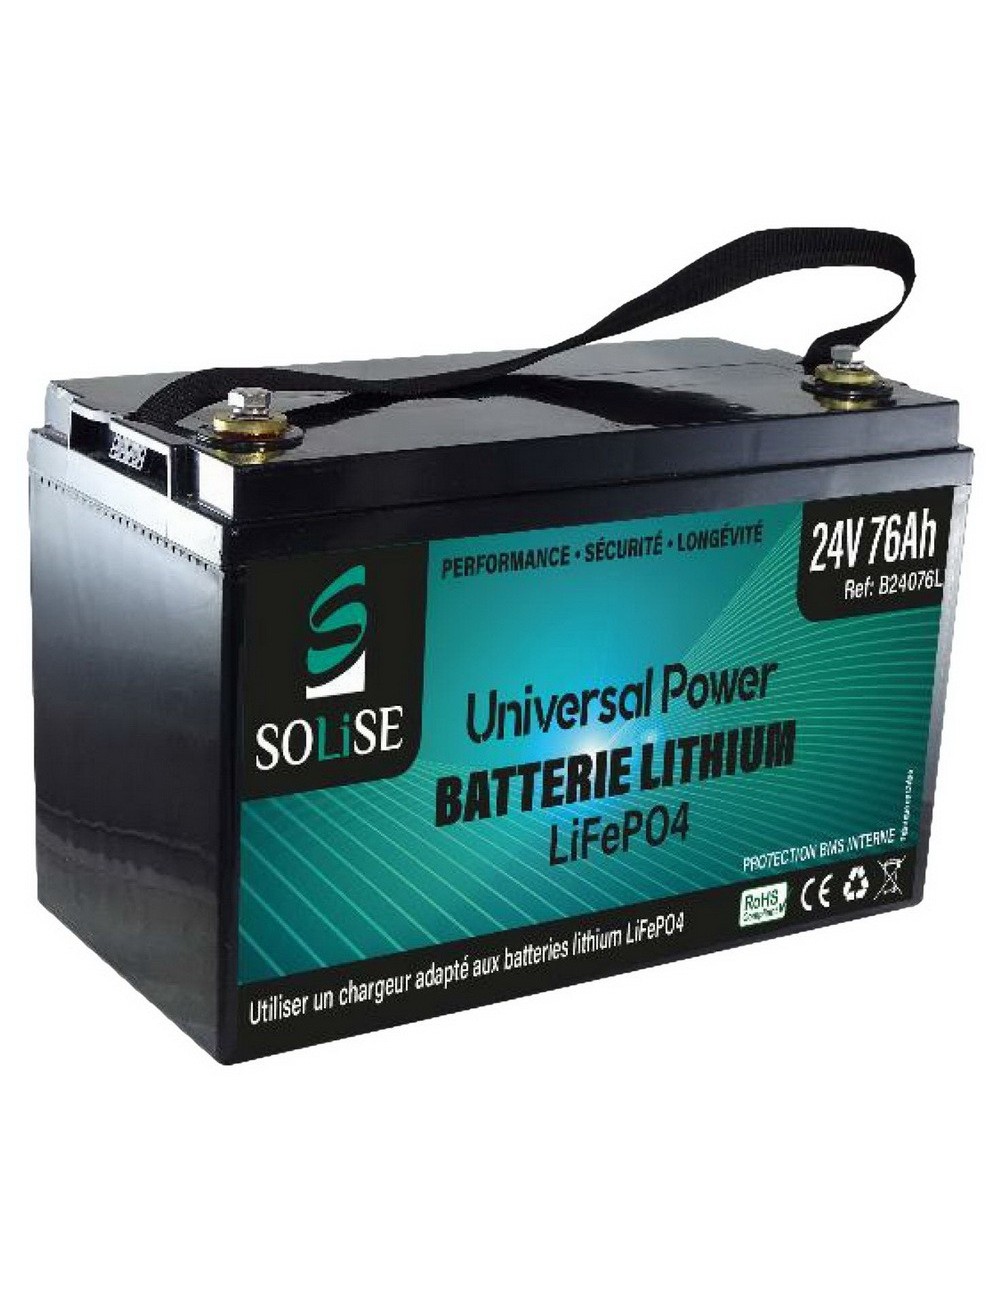 RNS B24034L (B24034L) Batterie LiFePO4 24V Solise (24V - 34Ah)